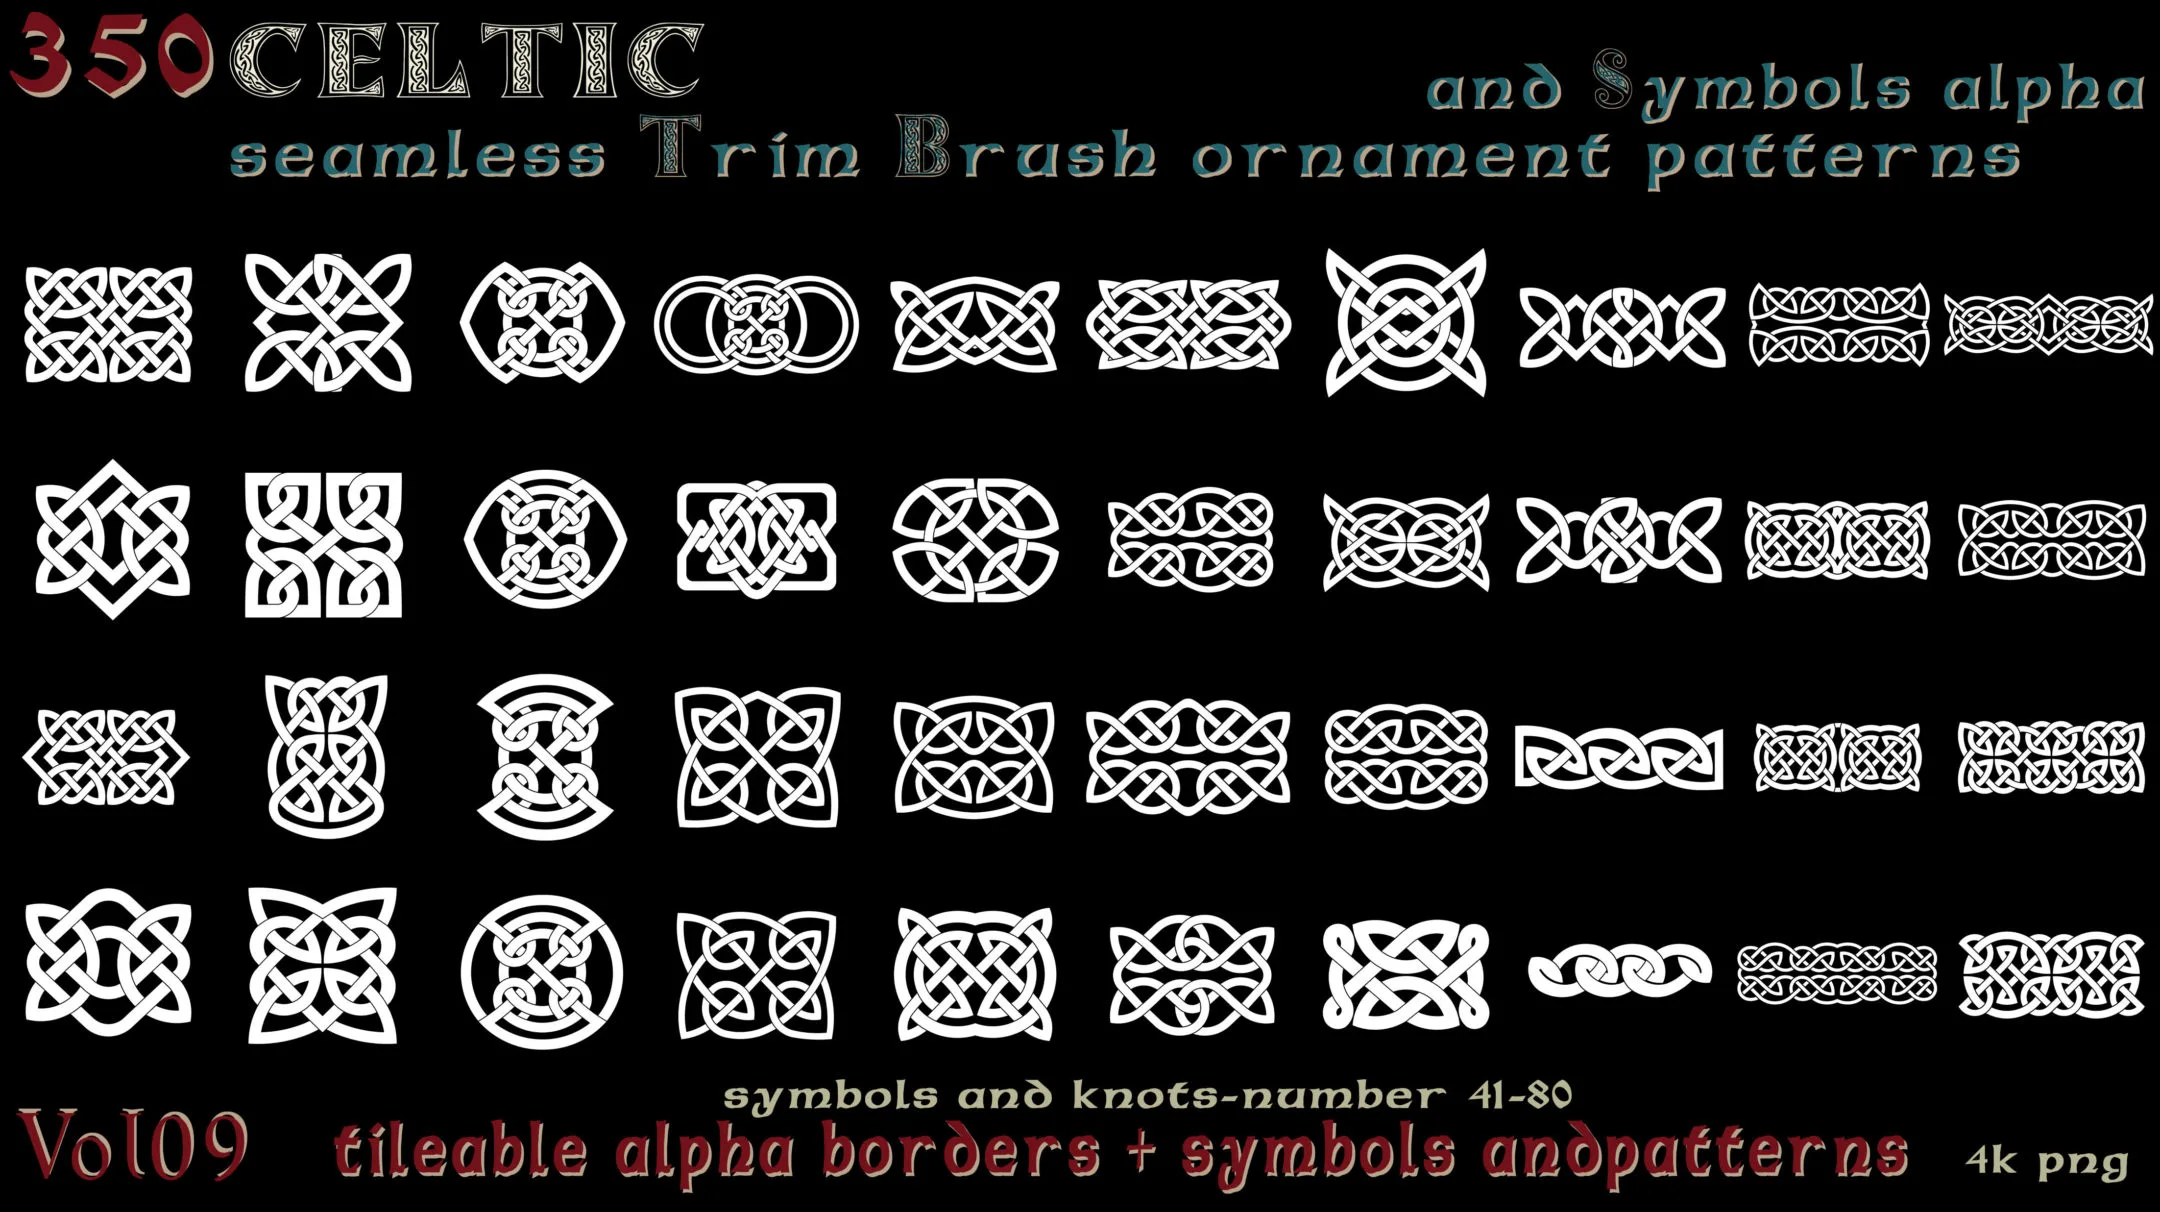 350 Celtic seamless Trim Brush ornament patterns and Symbols alpha - vol09